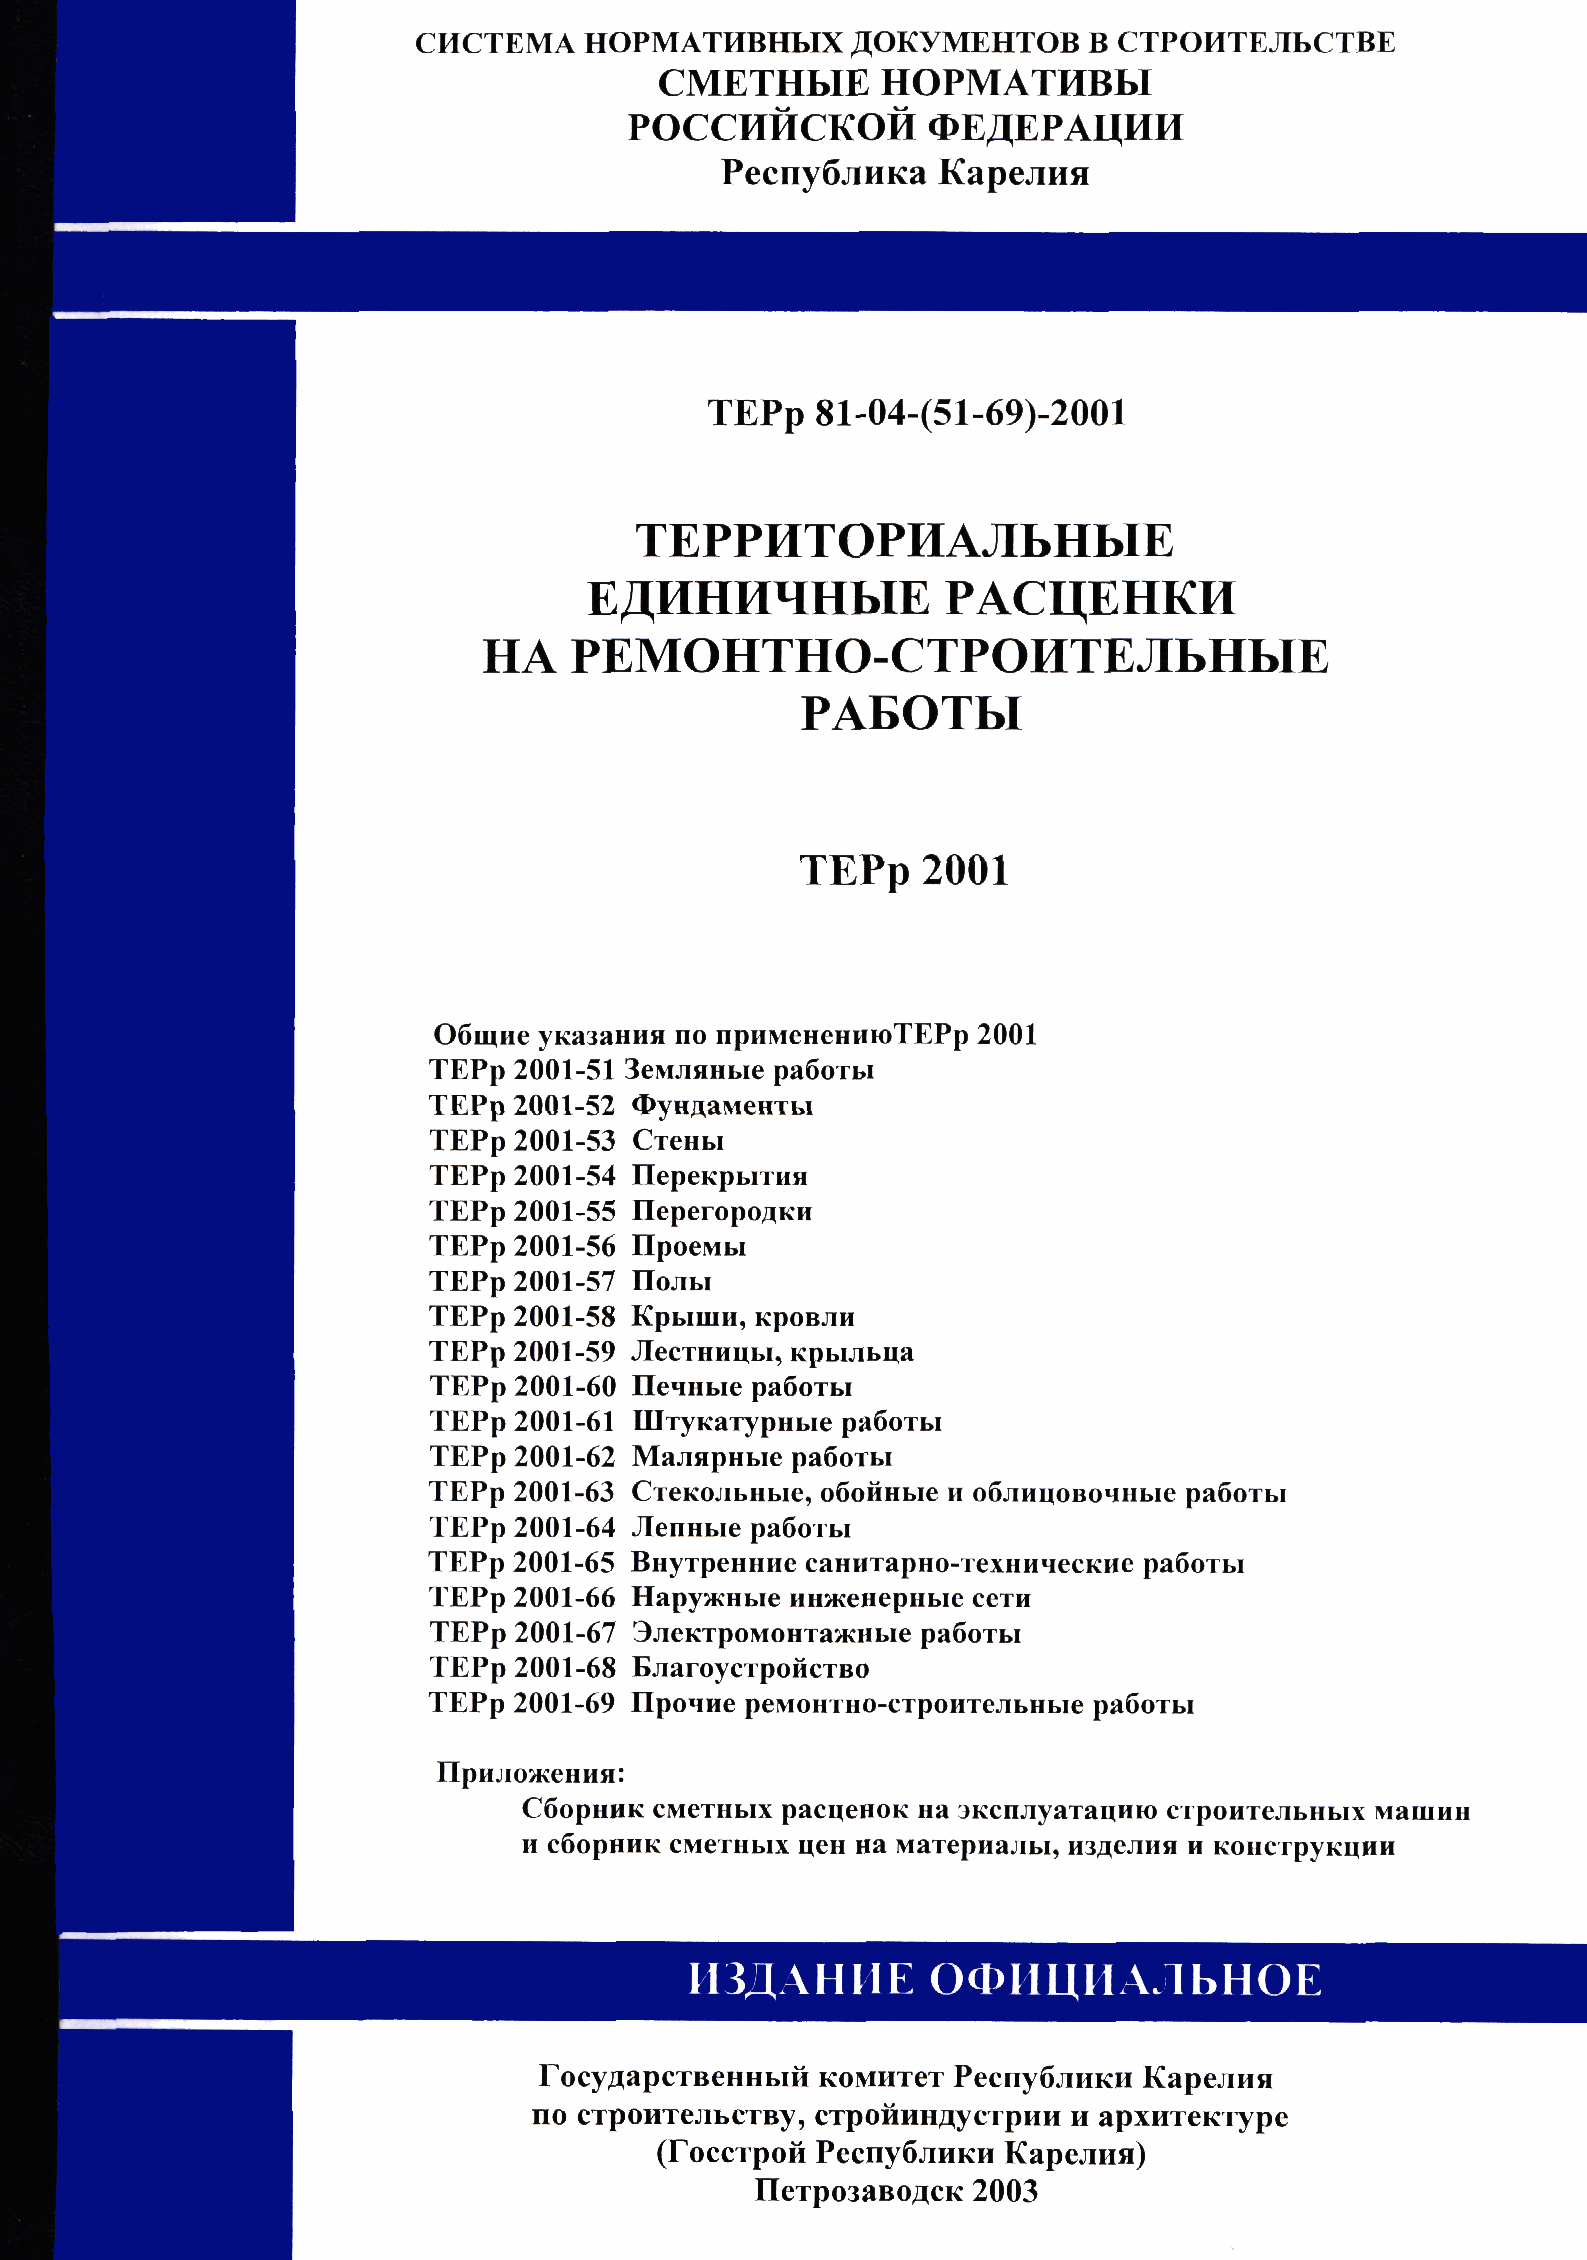 ТЕРр Республика Карелия 2001-62